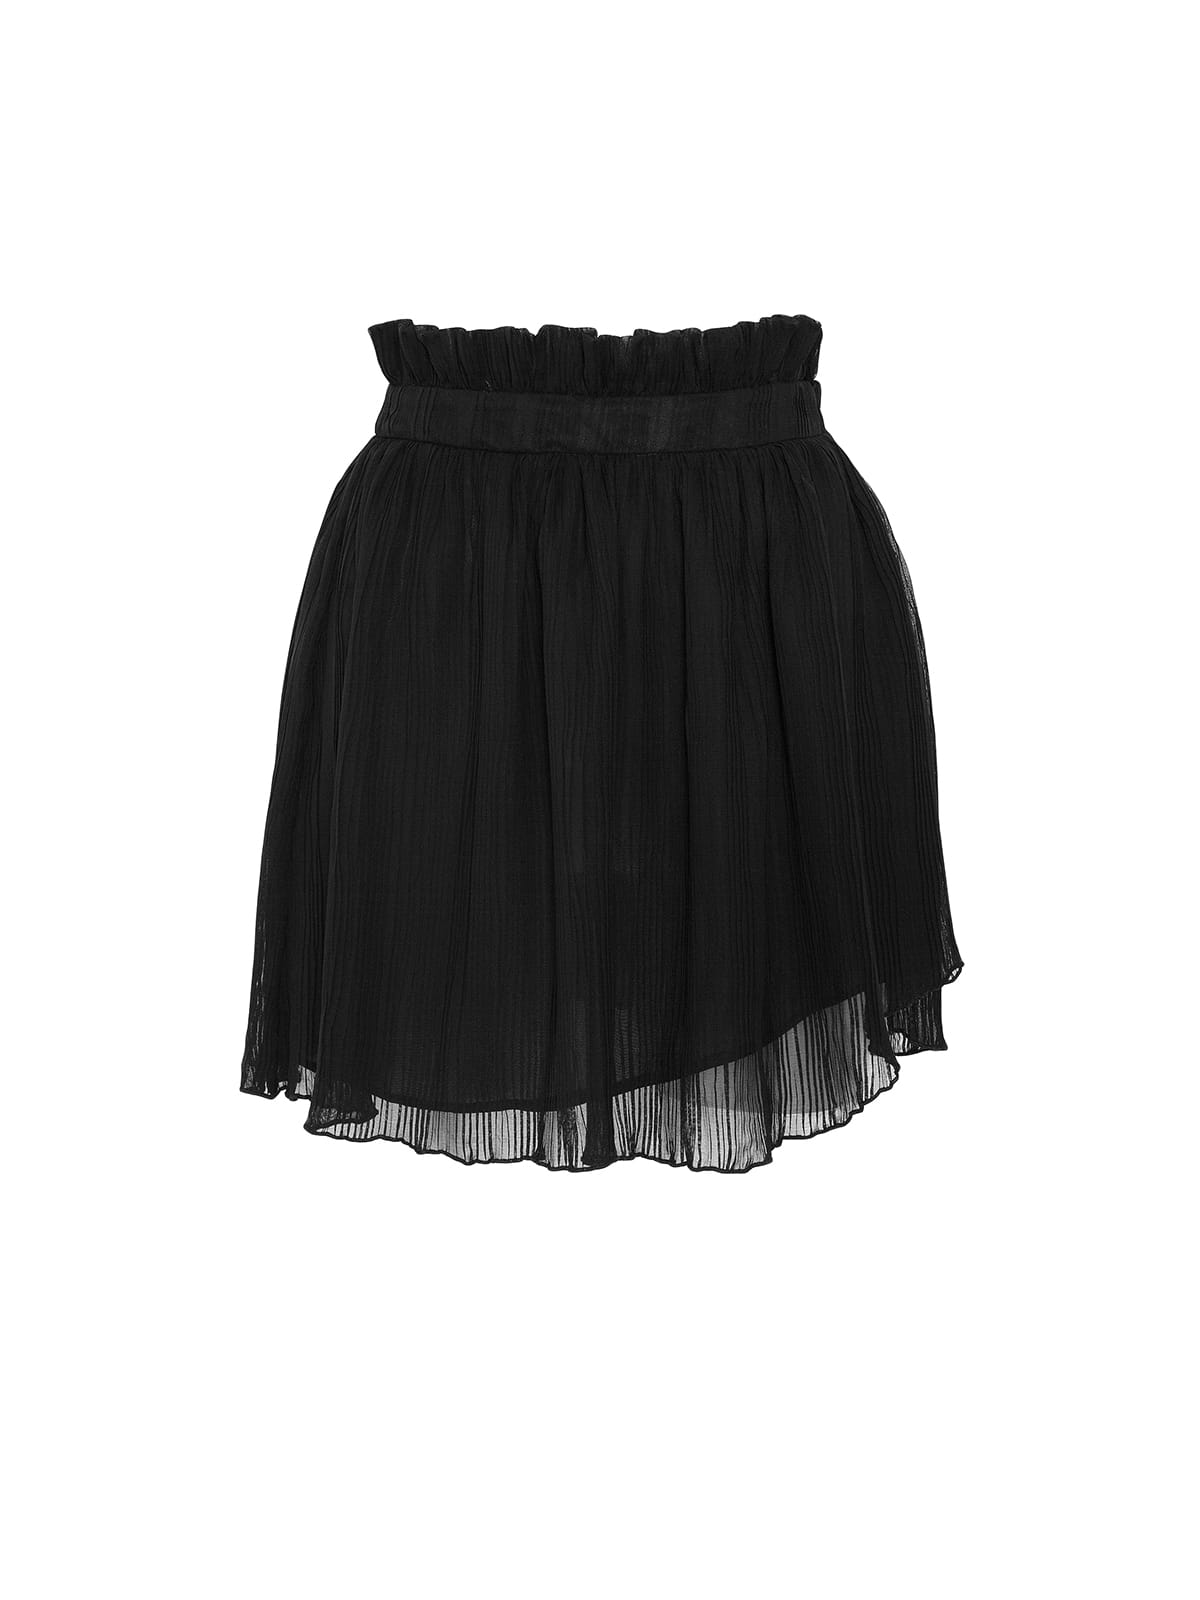 BLACK MINI - DILIGENT Clothes Official Site / Poland / Fashion Brand ...